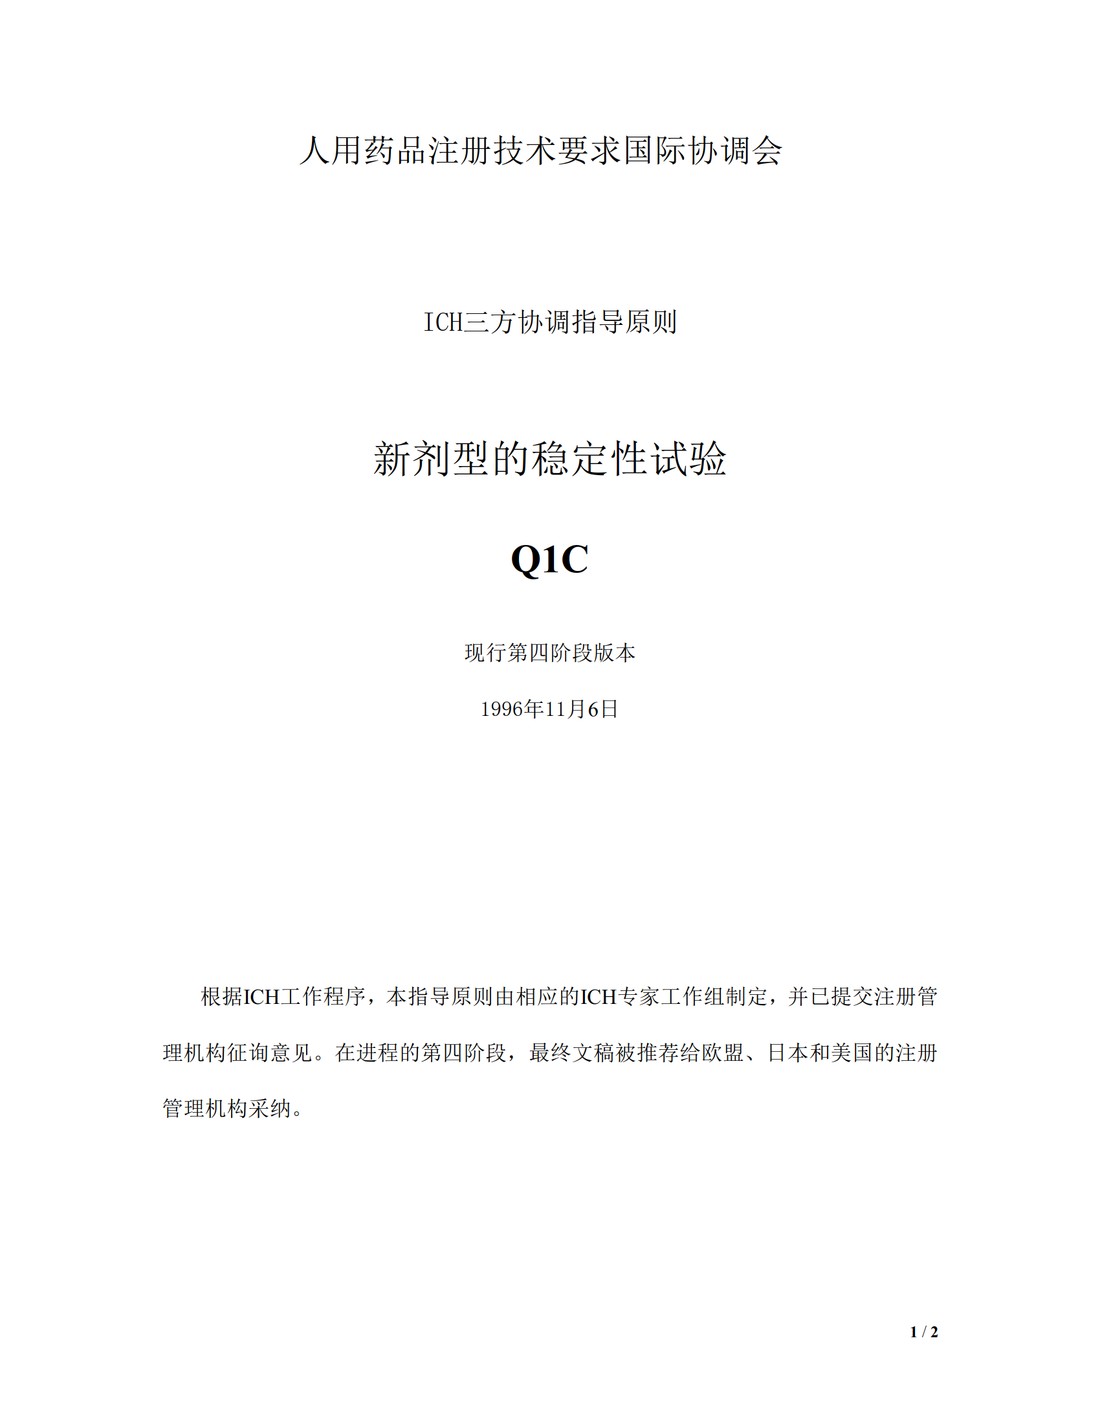 Q1C：新剂型的稳定性测试_1.jpg